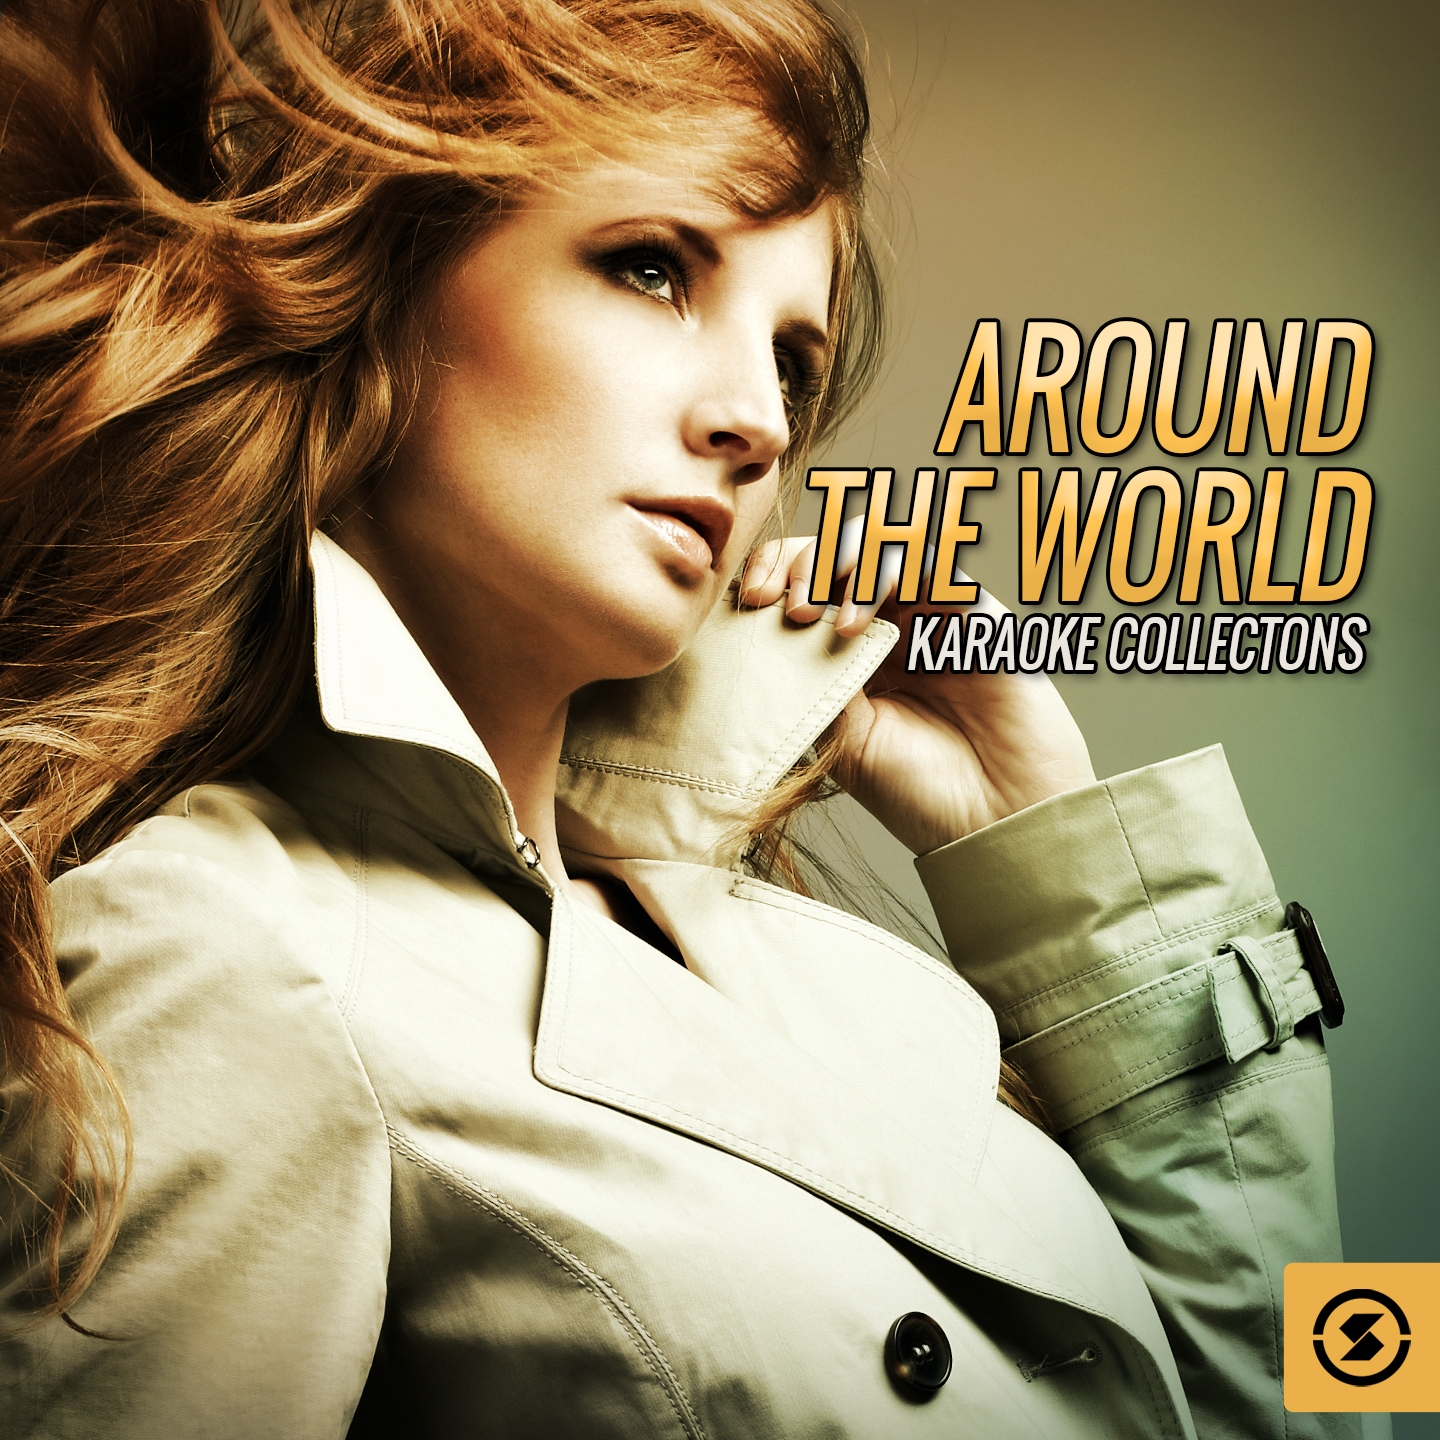 Around the World Karaoke Collectons